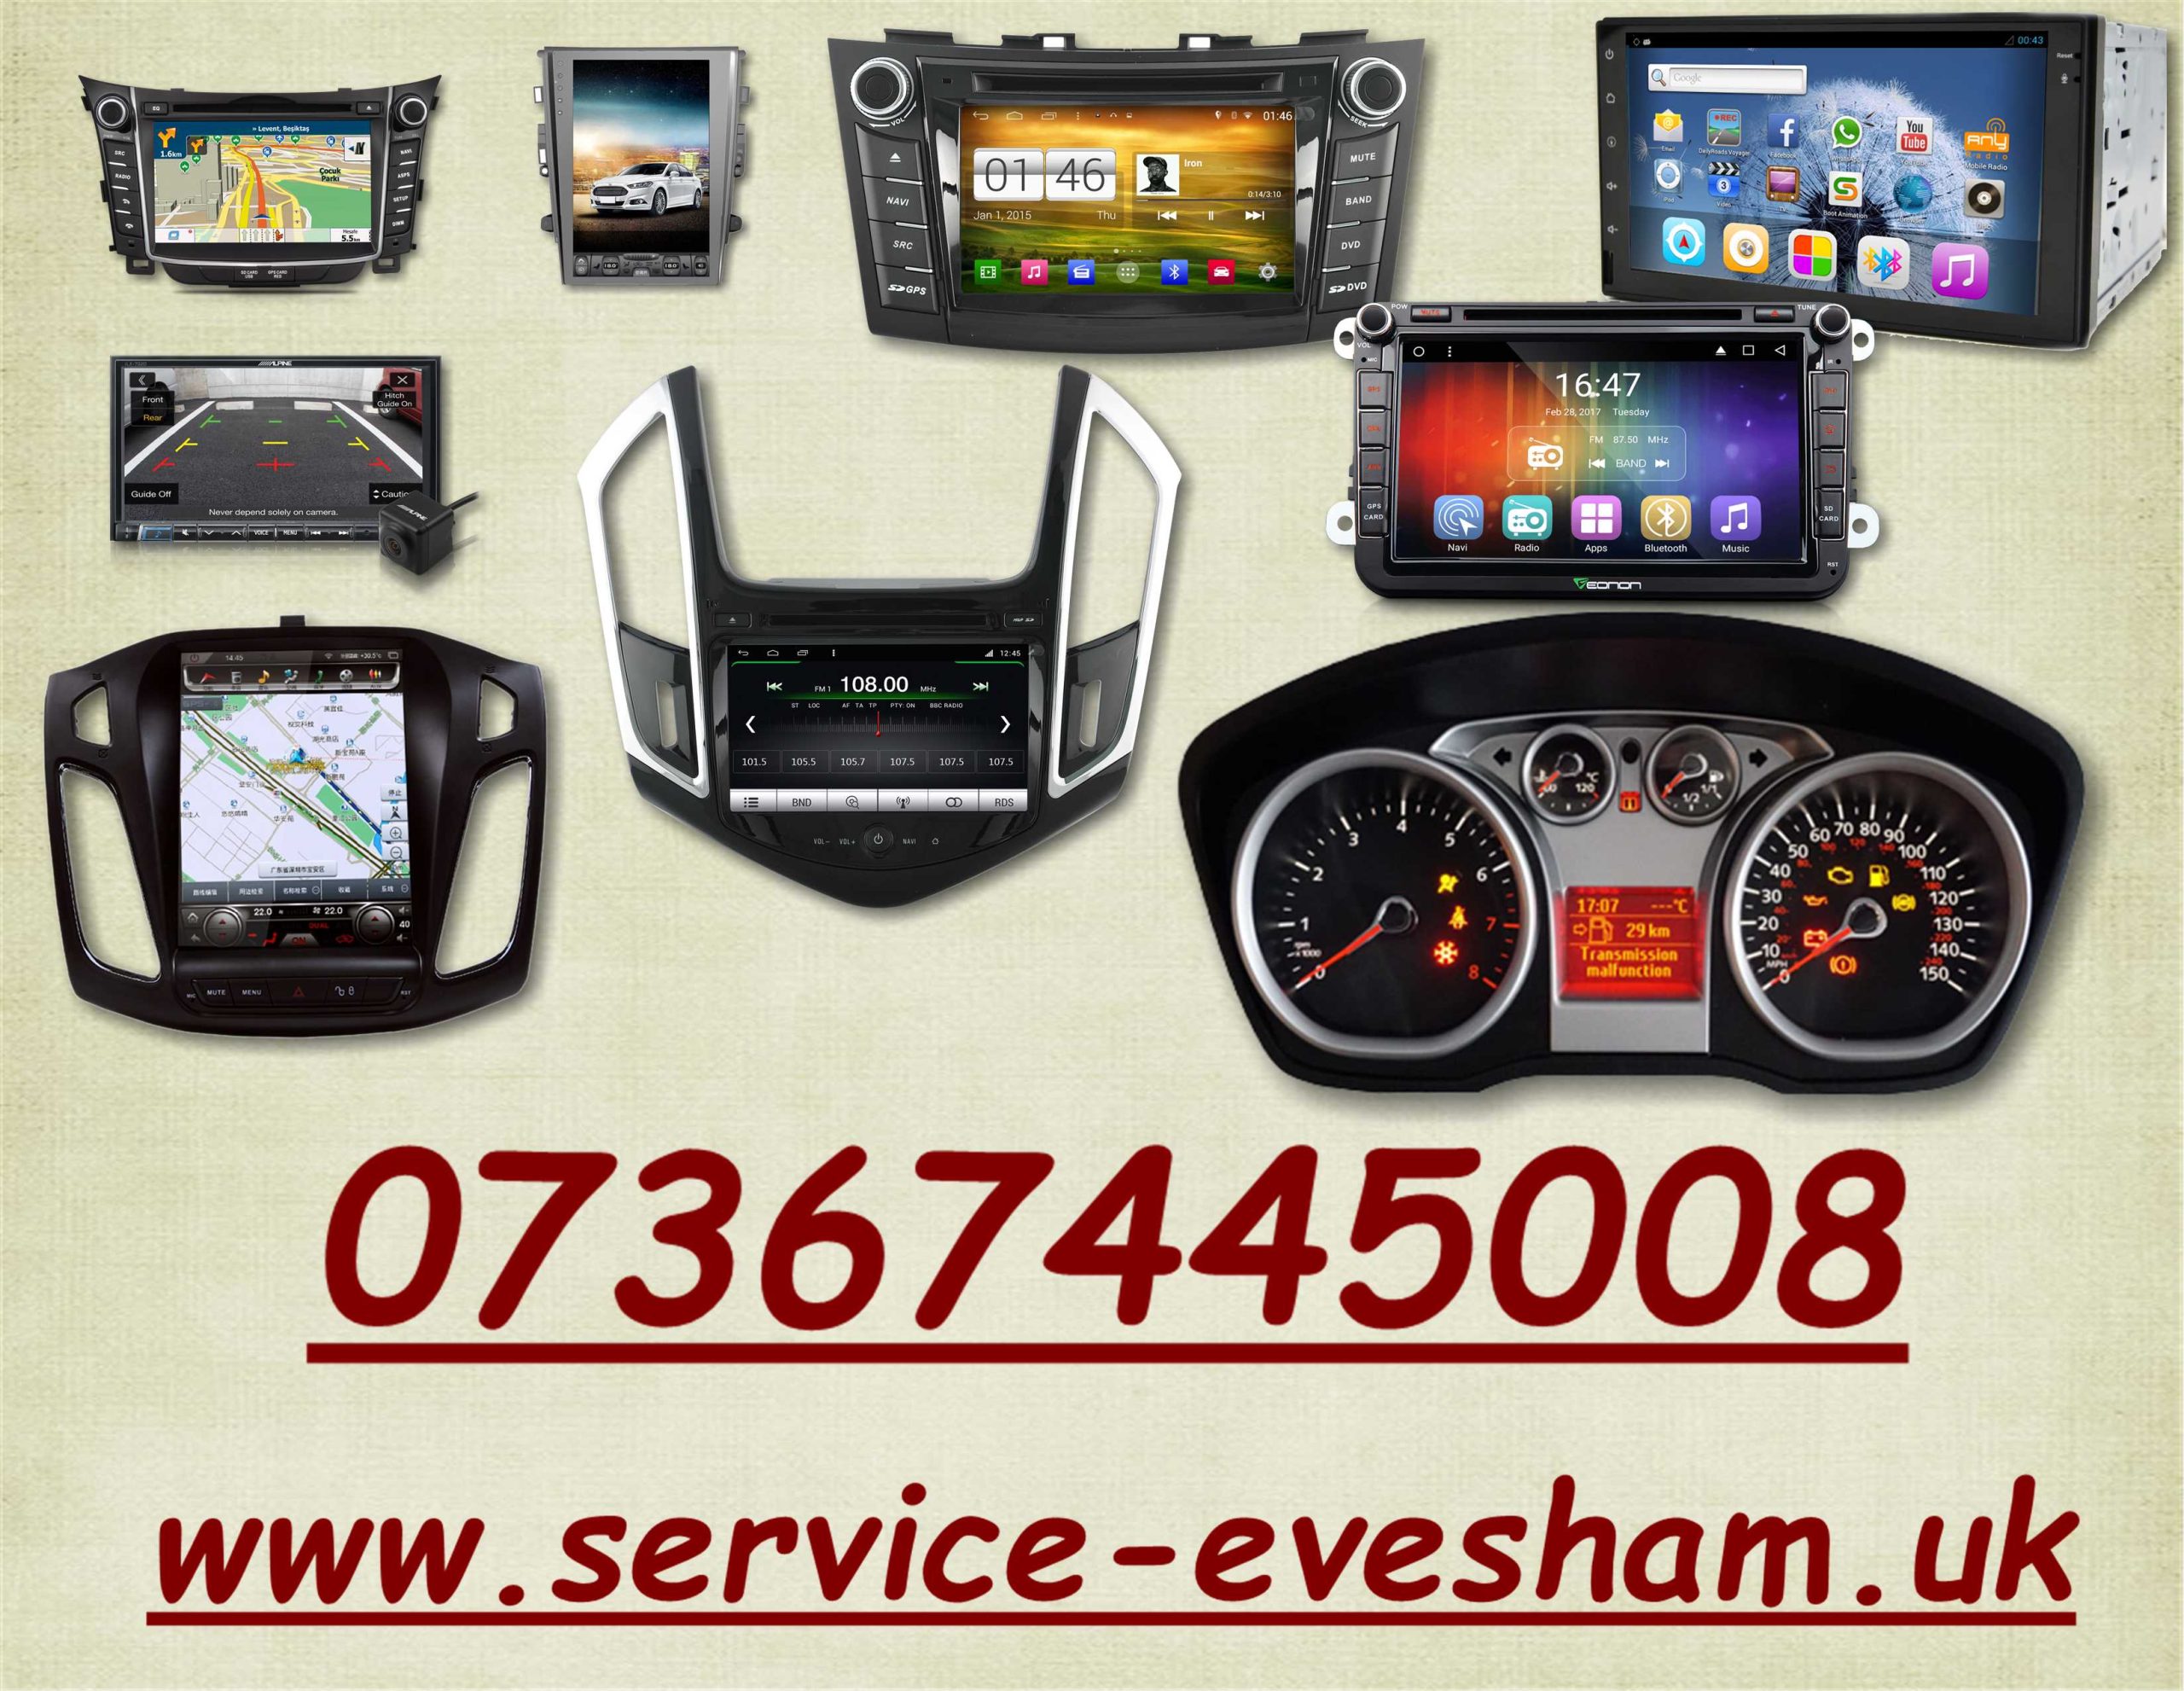 www.service-evesham.uk